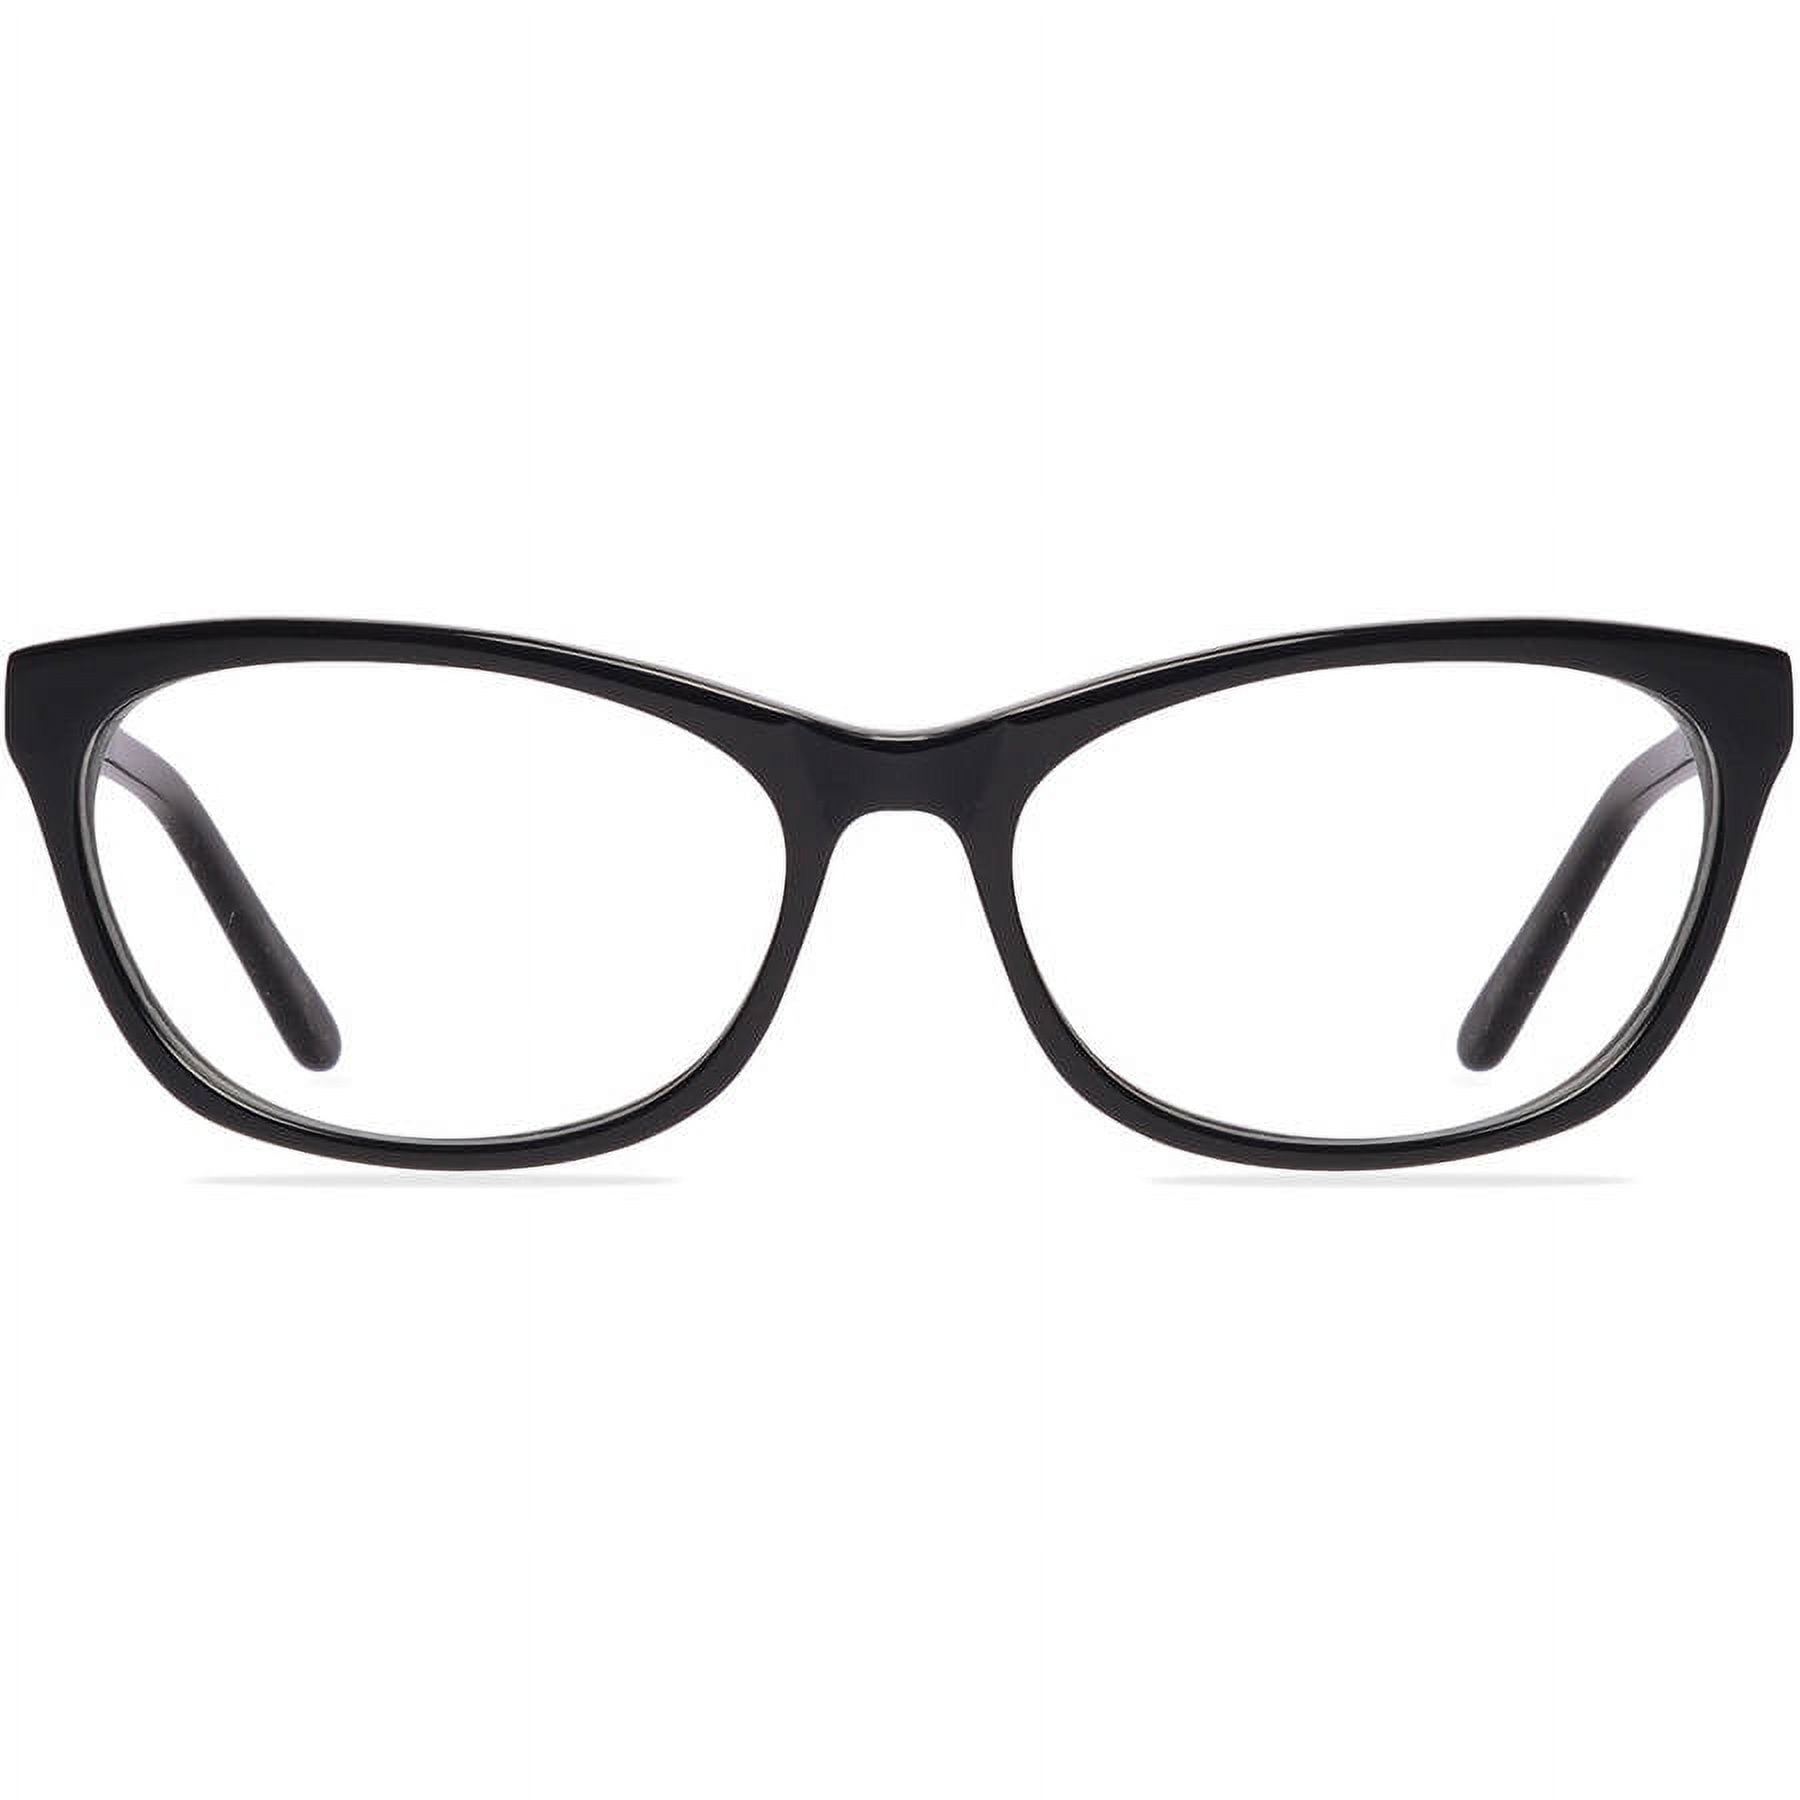 Progressive Eyeglasses Online with Mediumfit, Rectangle, Full-Rim Acetate/ Metal Design — Instance in White/Brown/Black by Eyebuydirect - Lenses